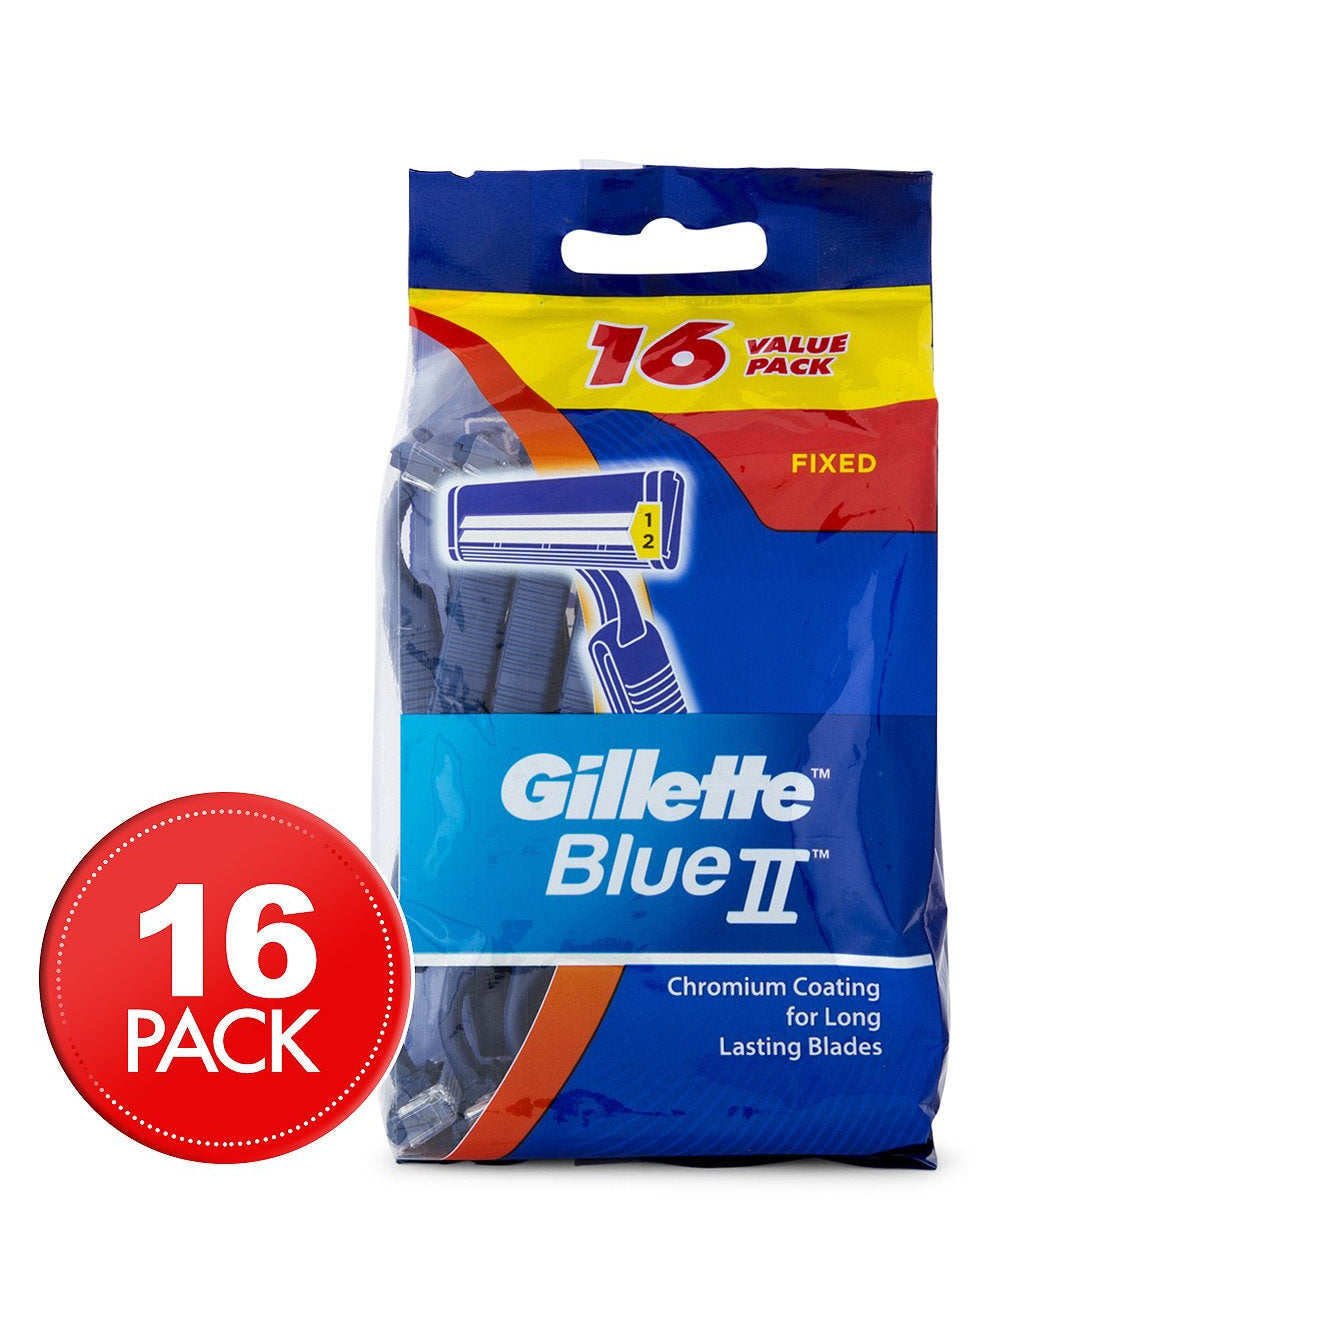 Gillette Blue 2 Disposable Razors 16 pack